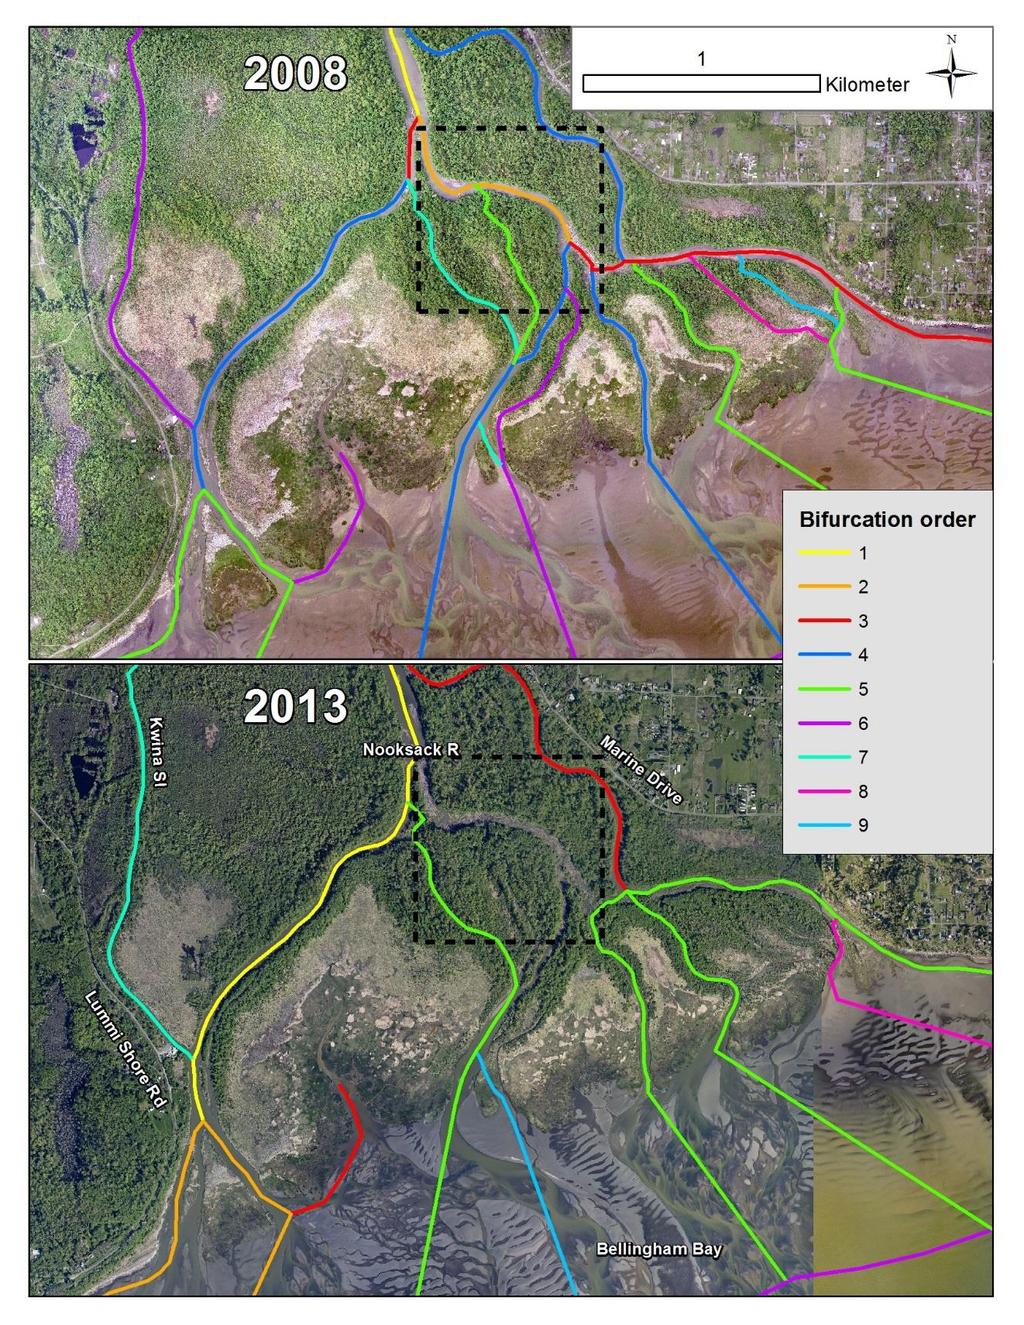 Figure 2.3.2. Pre-logjam fish pathways in 2008 (top panel) compared to post-logjam pathways in 2013 (bottom panel).